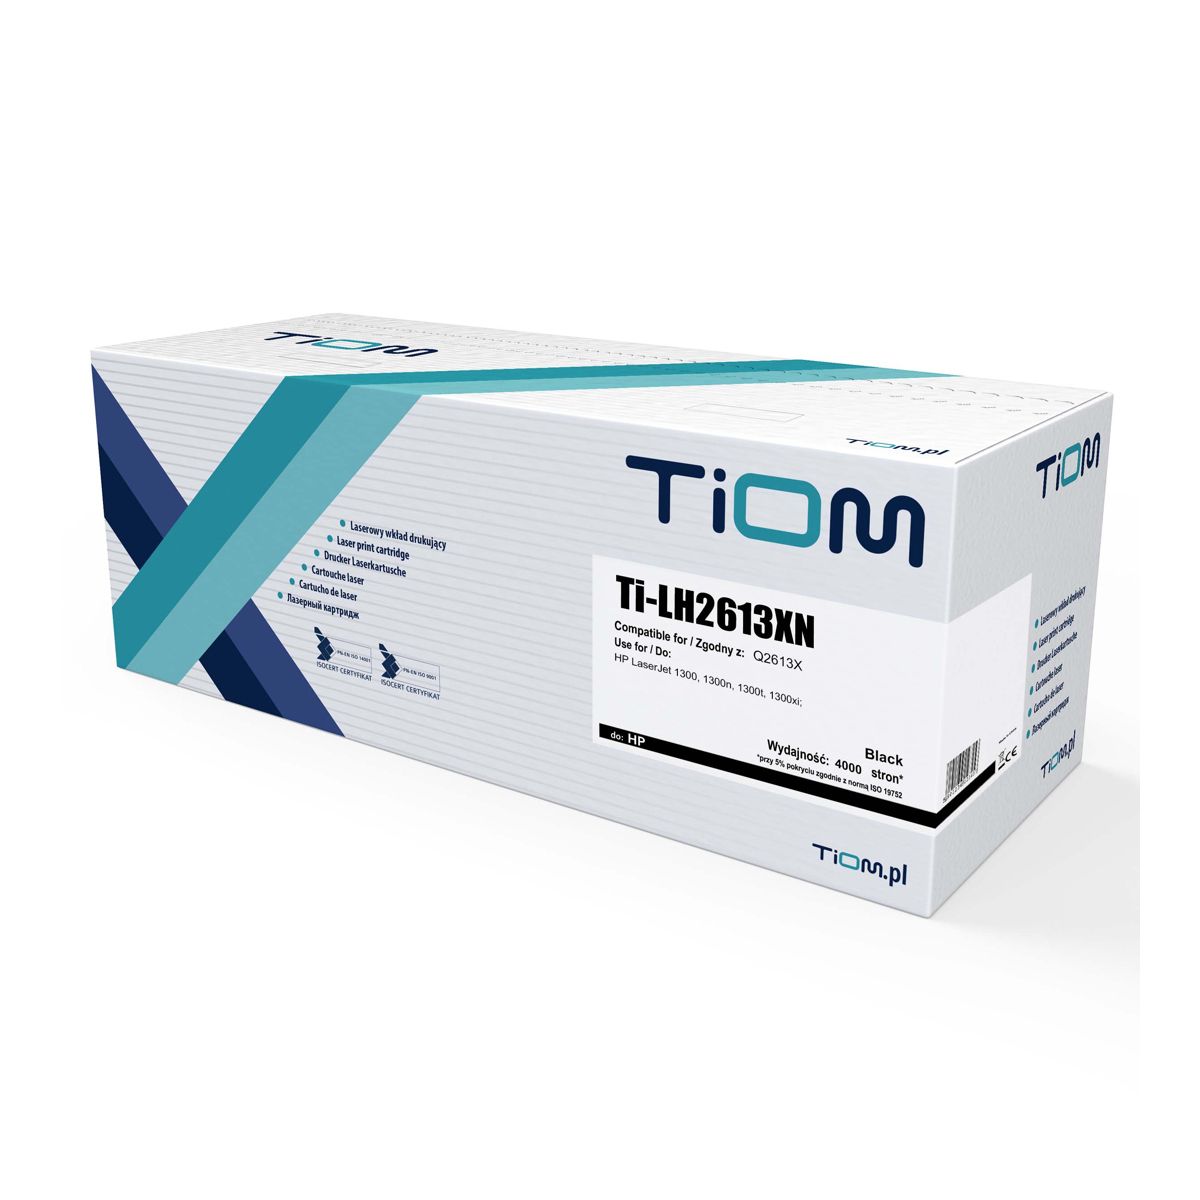 Toner alternatywny Hp Q2613x Tiom (Ti-LH2613XN)